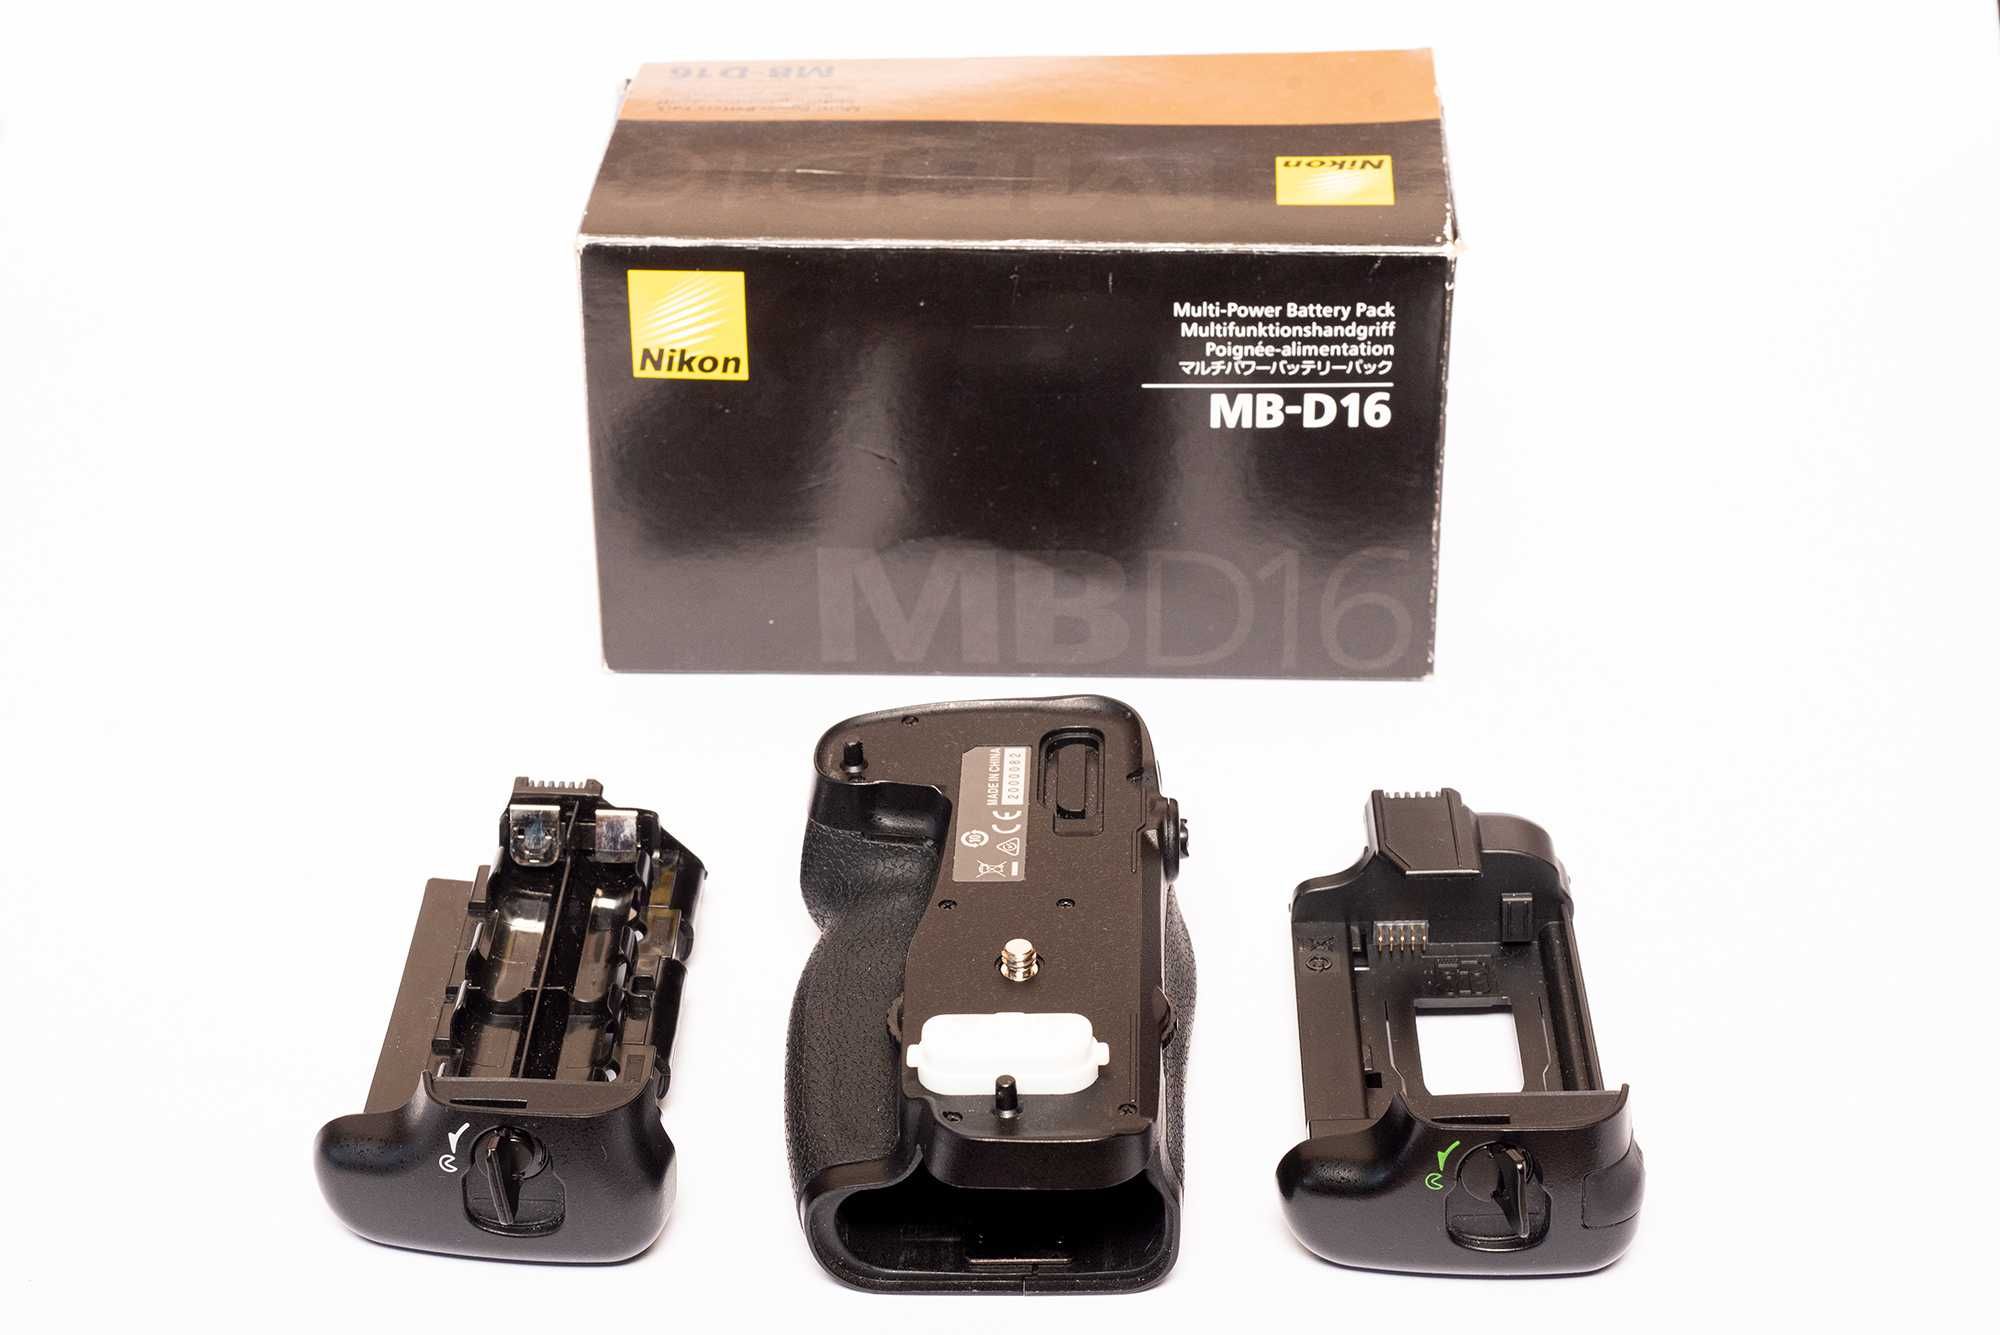 MB - D16 Nikon Multi-Power Battery Pack